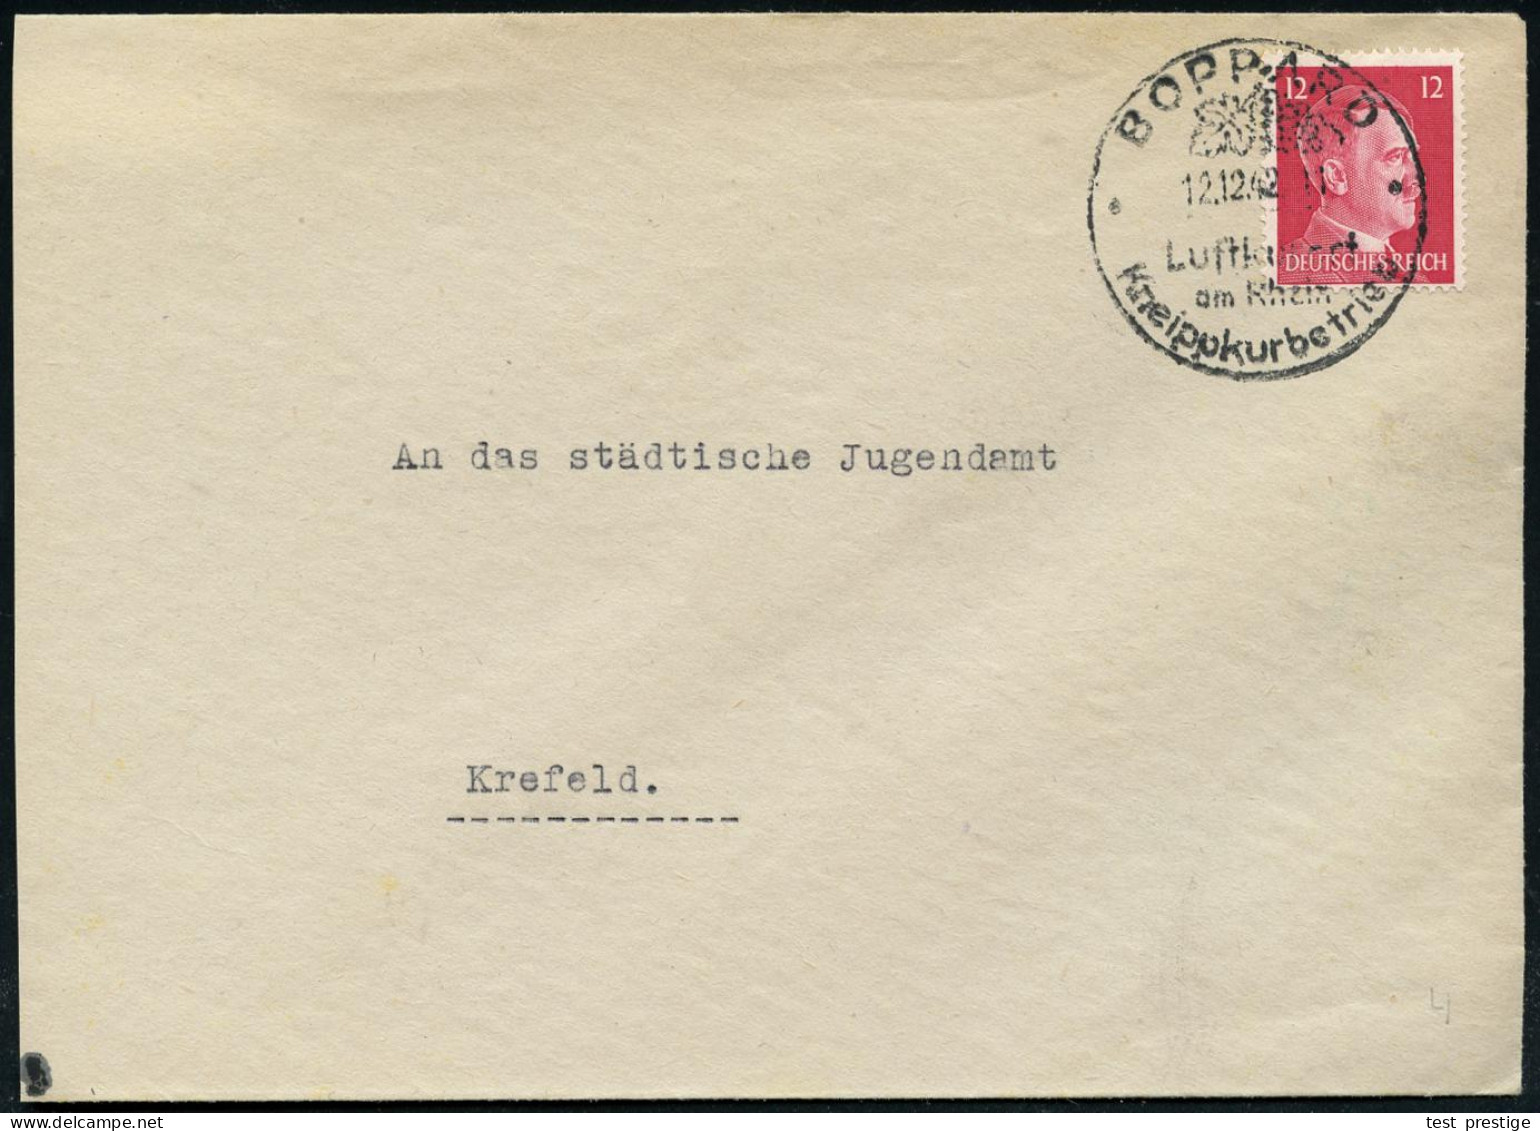 BOPPARD/ Luftkurort/ Am Rhein/ Kneippkurbetrieb 1942 (12.12.) Seltener HWSt (Weinblatt) Fernbf. (Bo.4) - SEBASTIAN KNEIP - Medicine